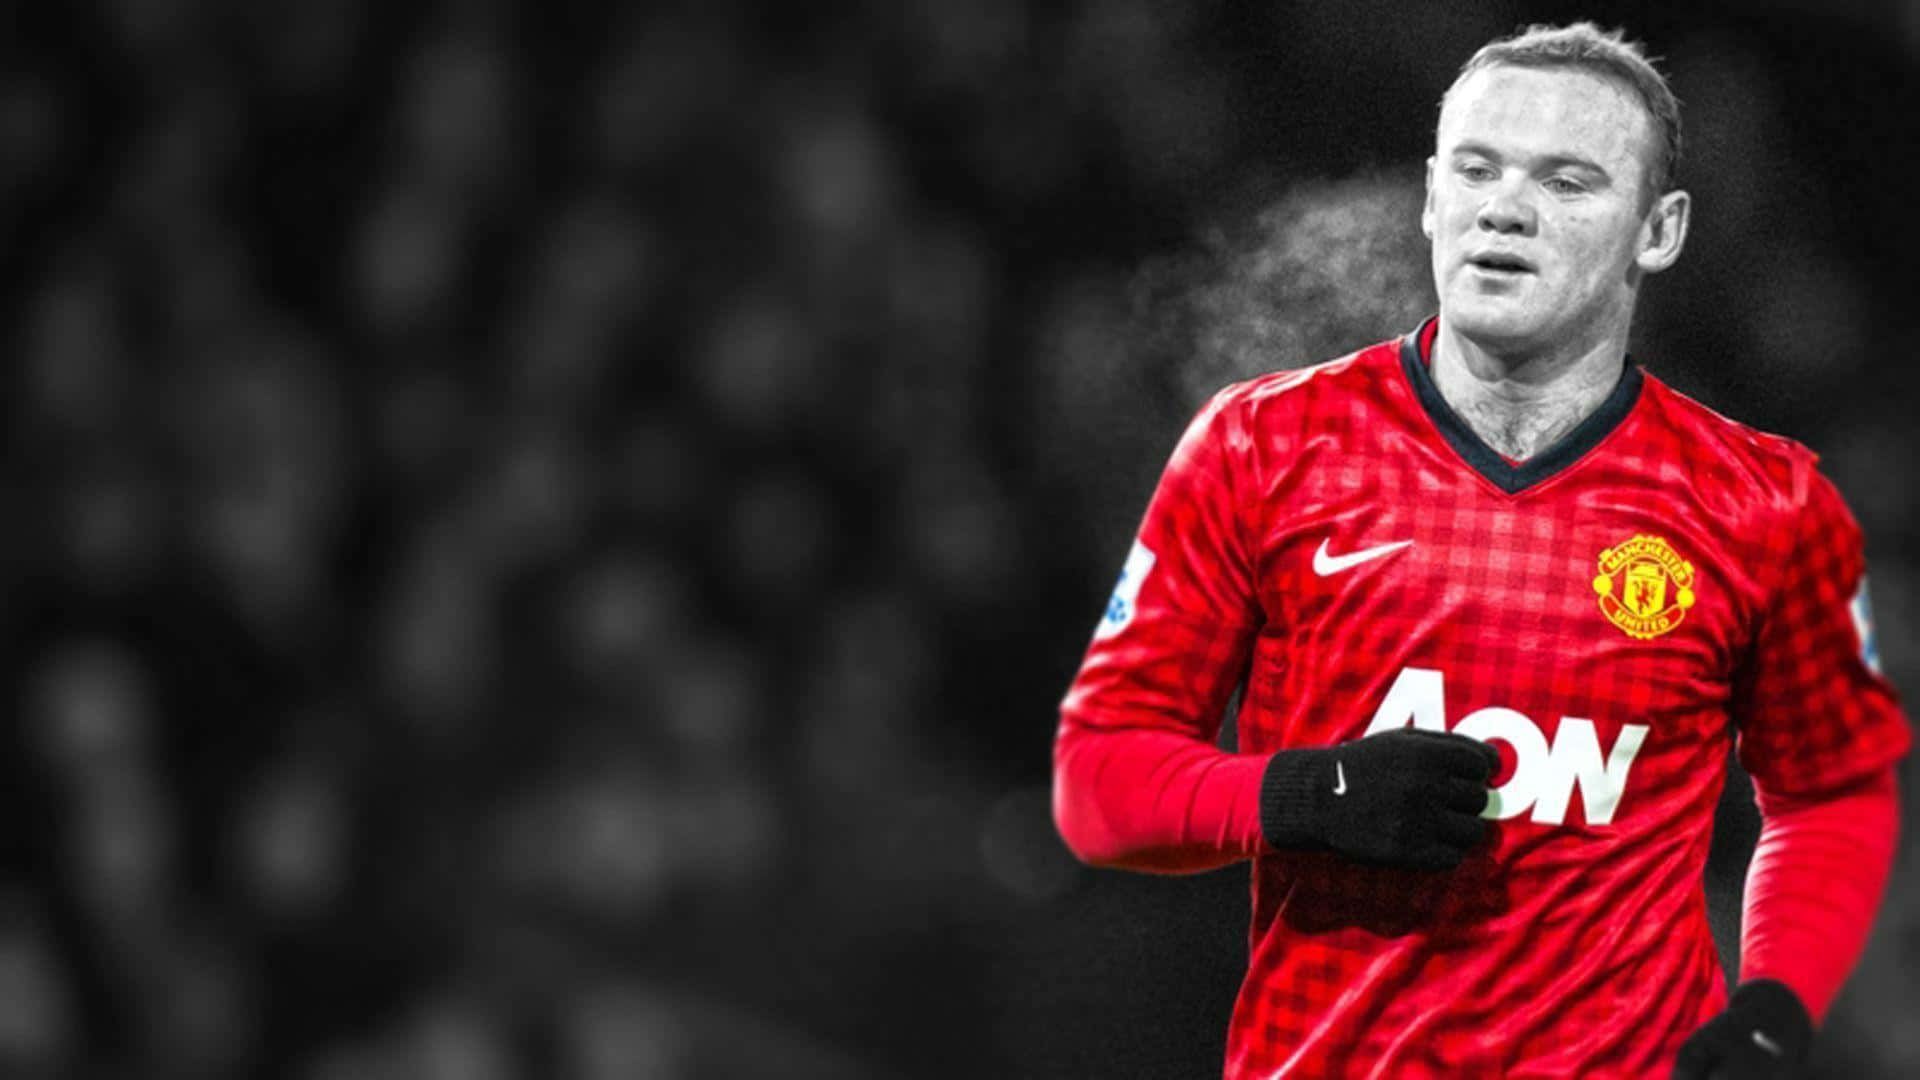 Professional Soccer Player Wayne Rooney